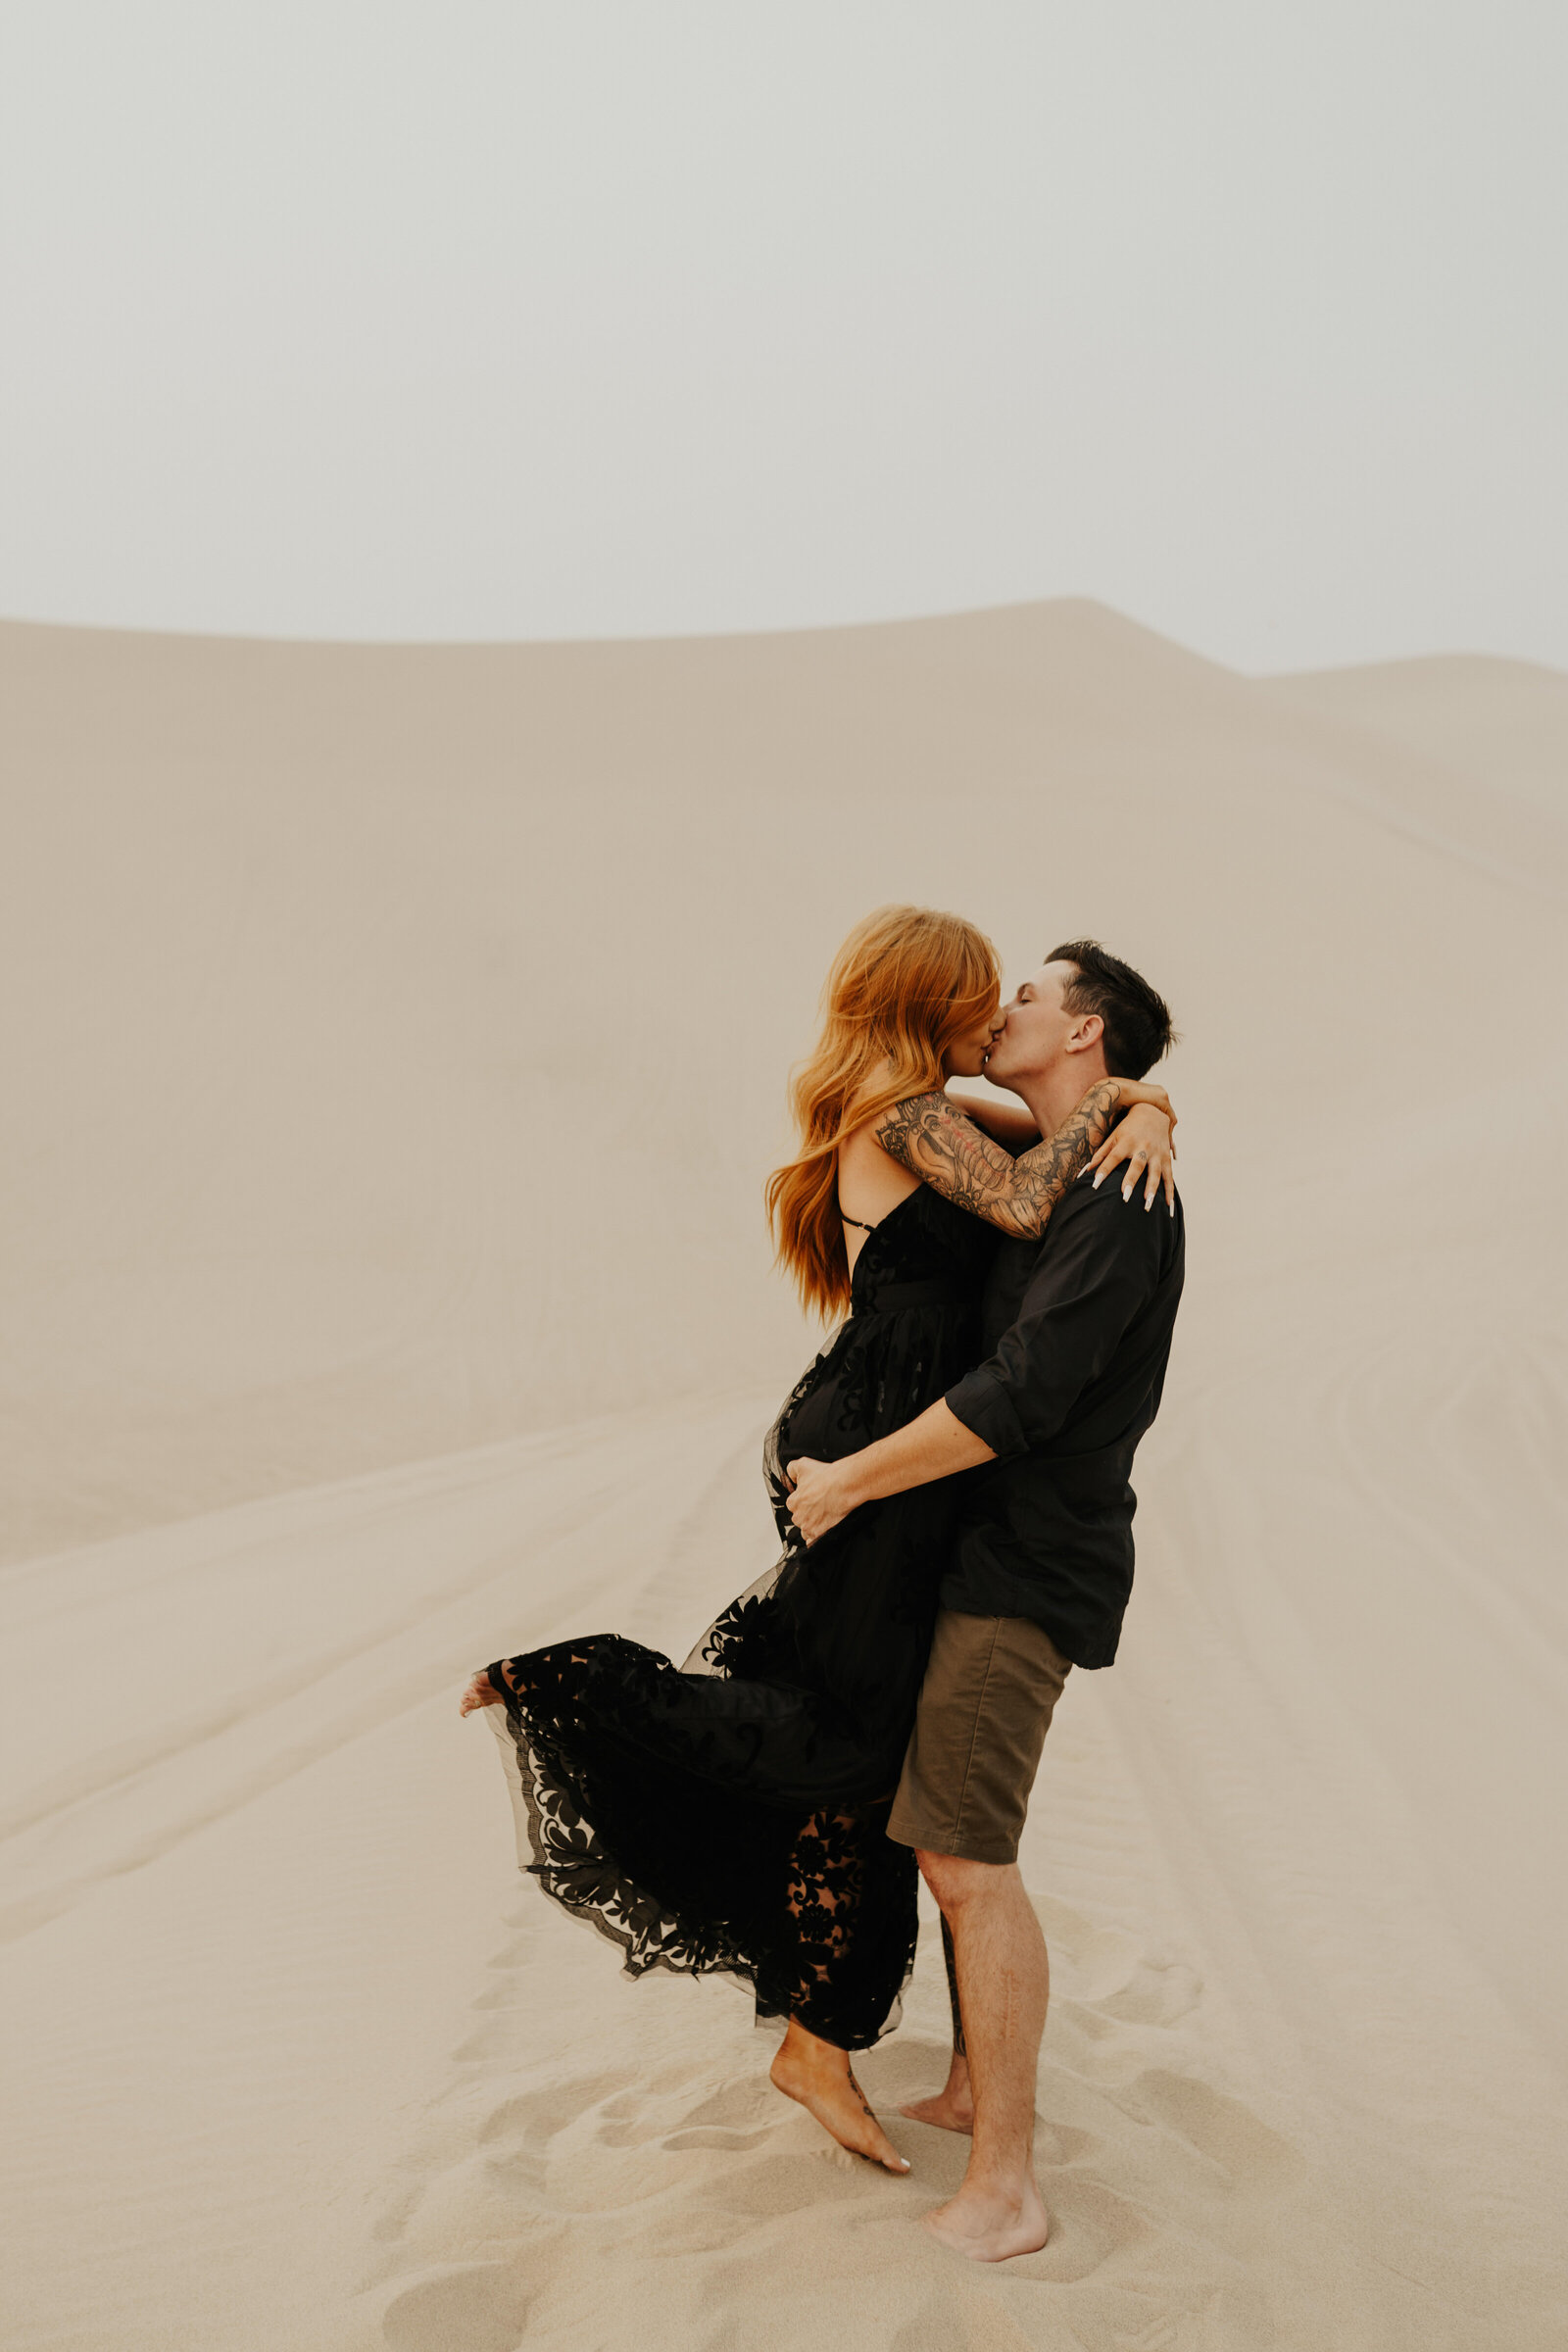 Sand Dunes Couples Photos - Raquel King Photography8